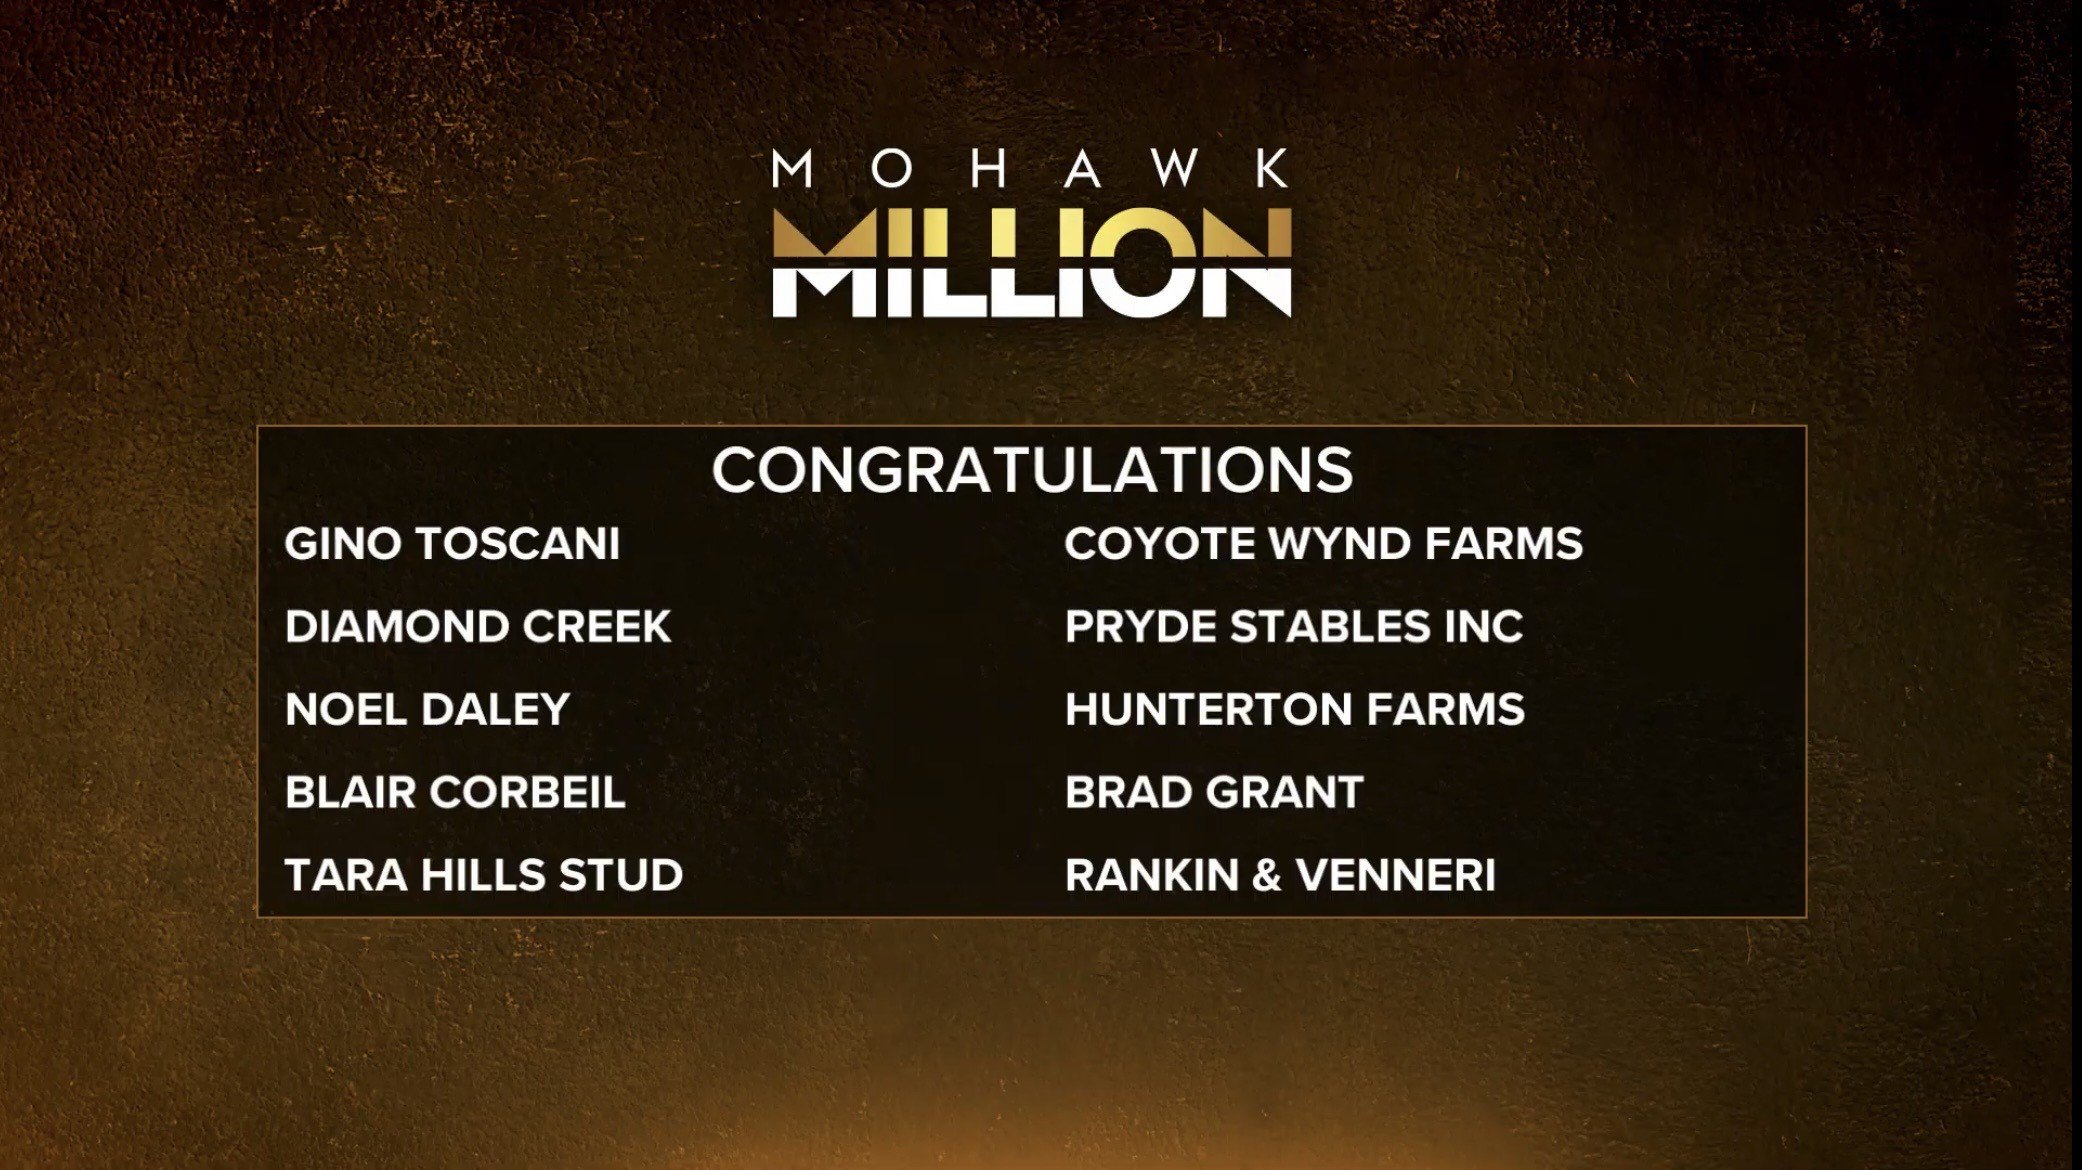 Mohawk Million slot draw conducted